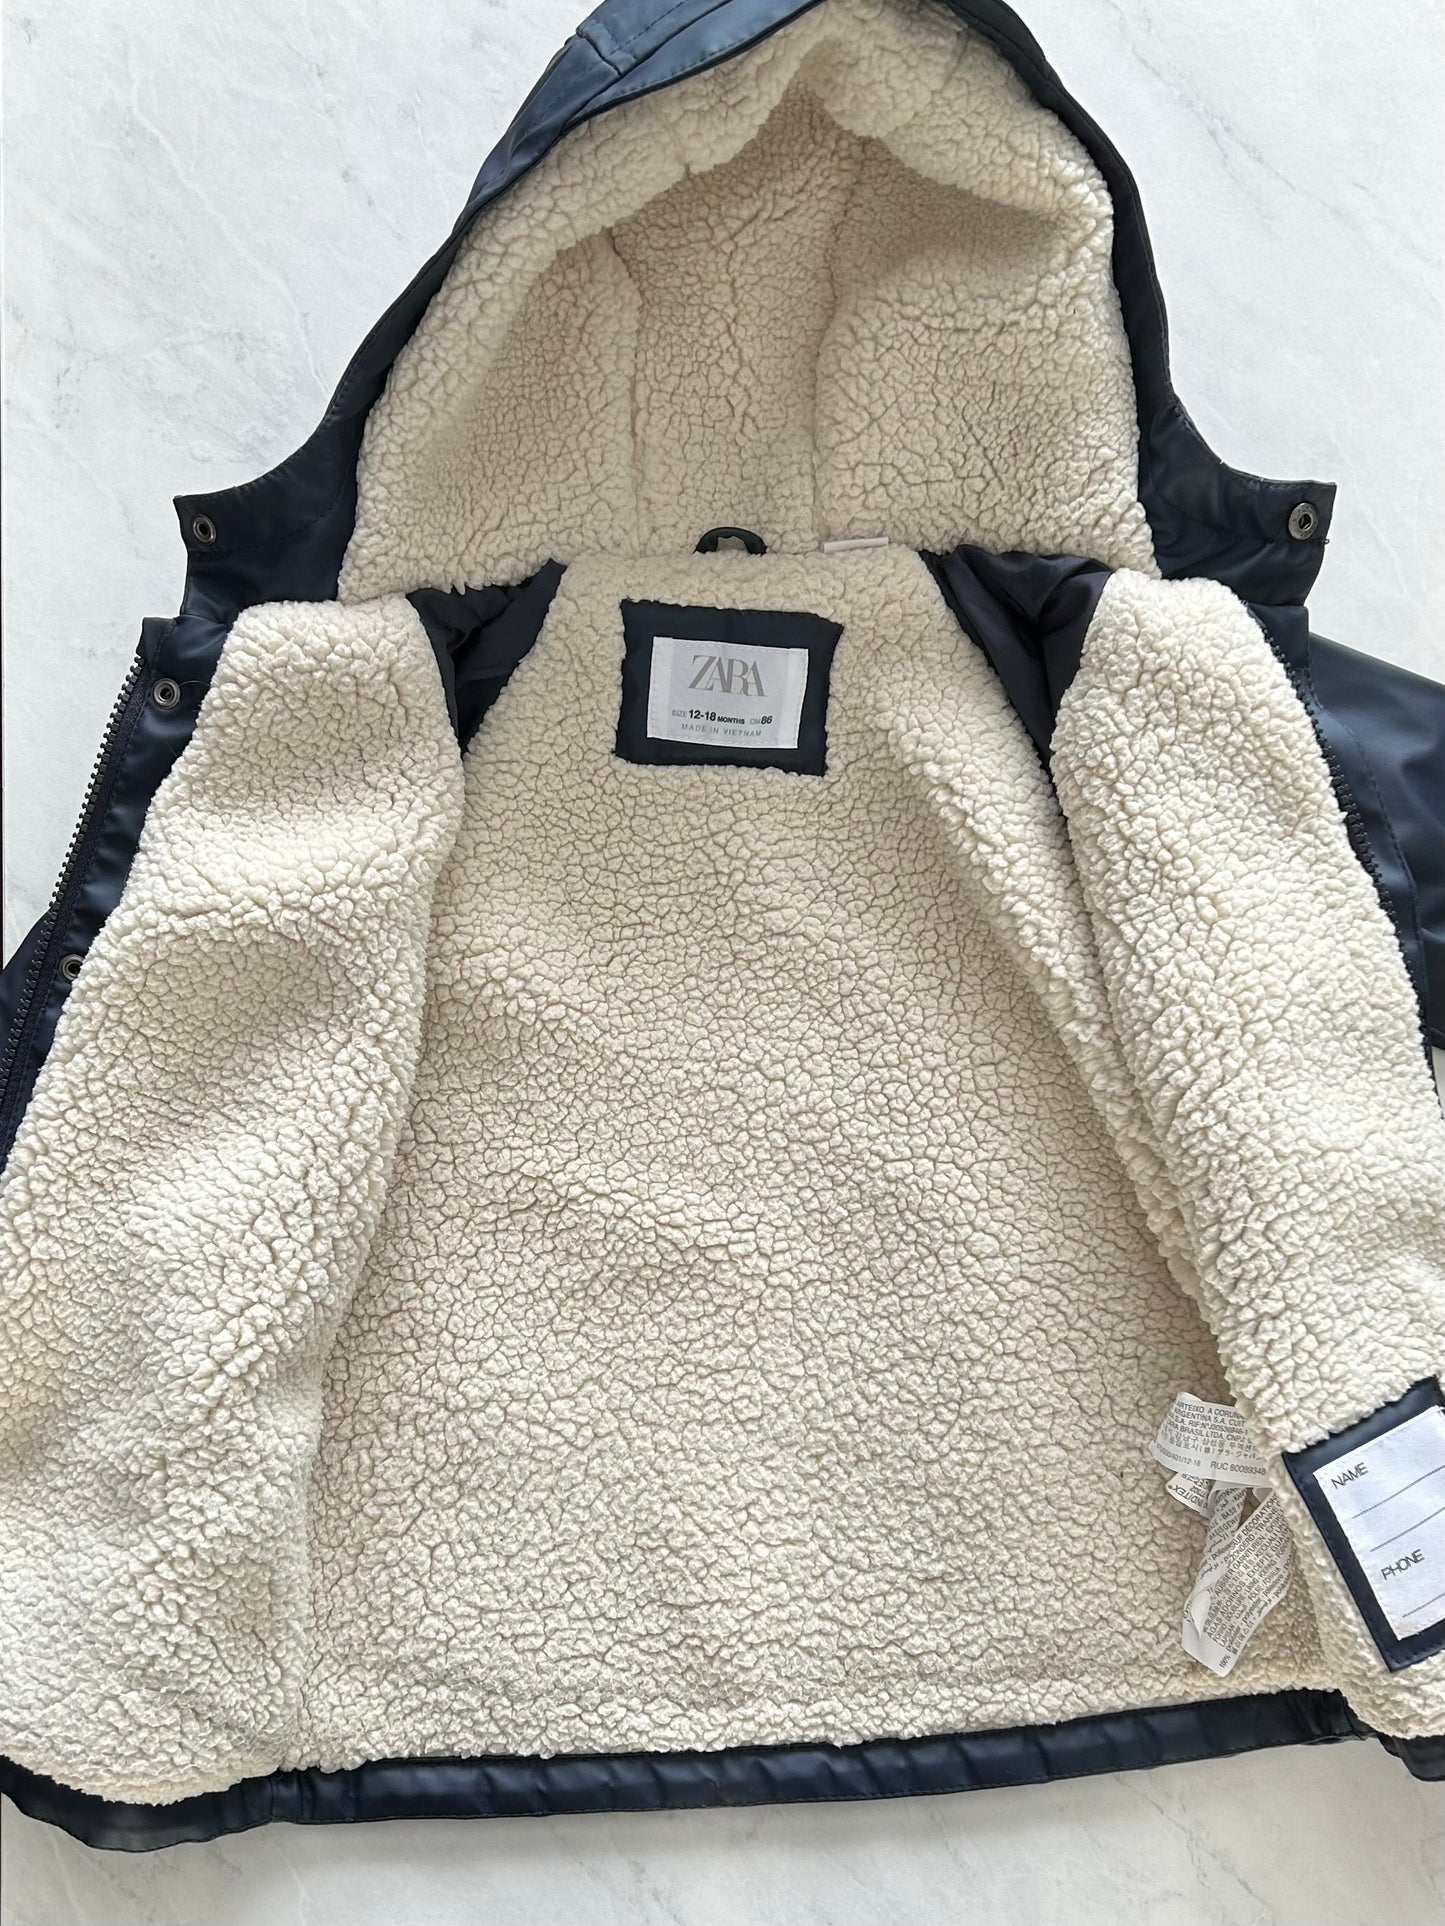 Manteau imperméable doublé - Zara - 12-18 mois